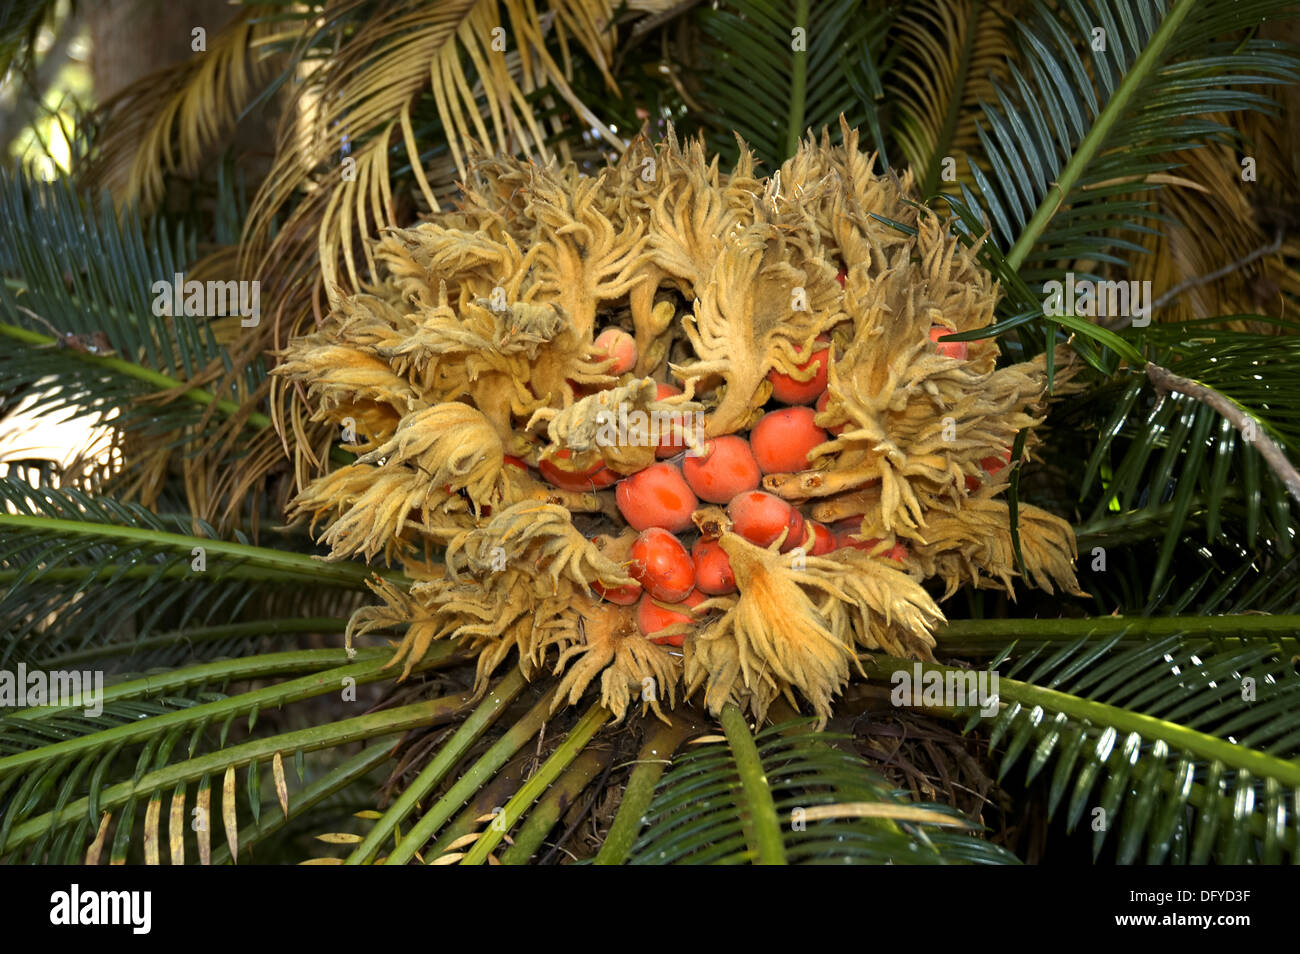 sago palm tree seeds